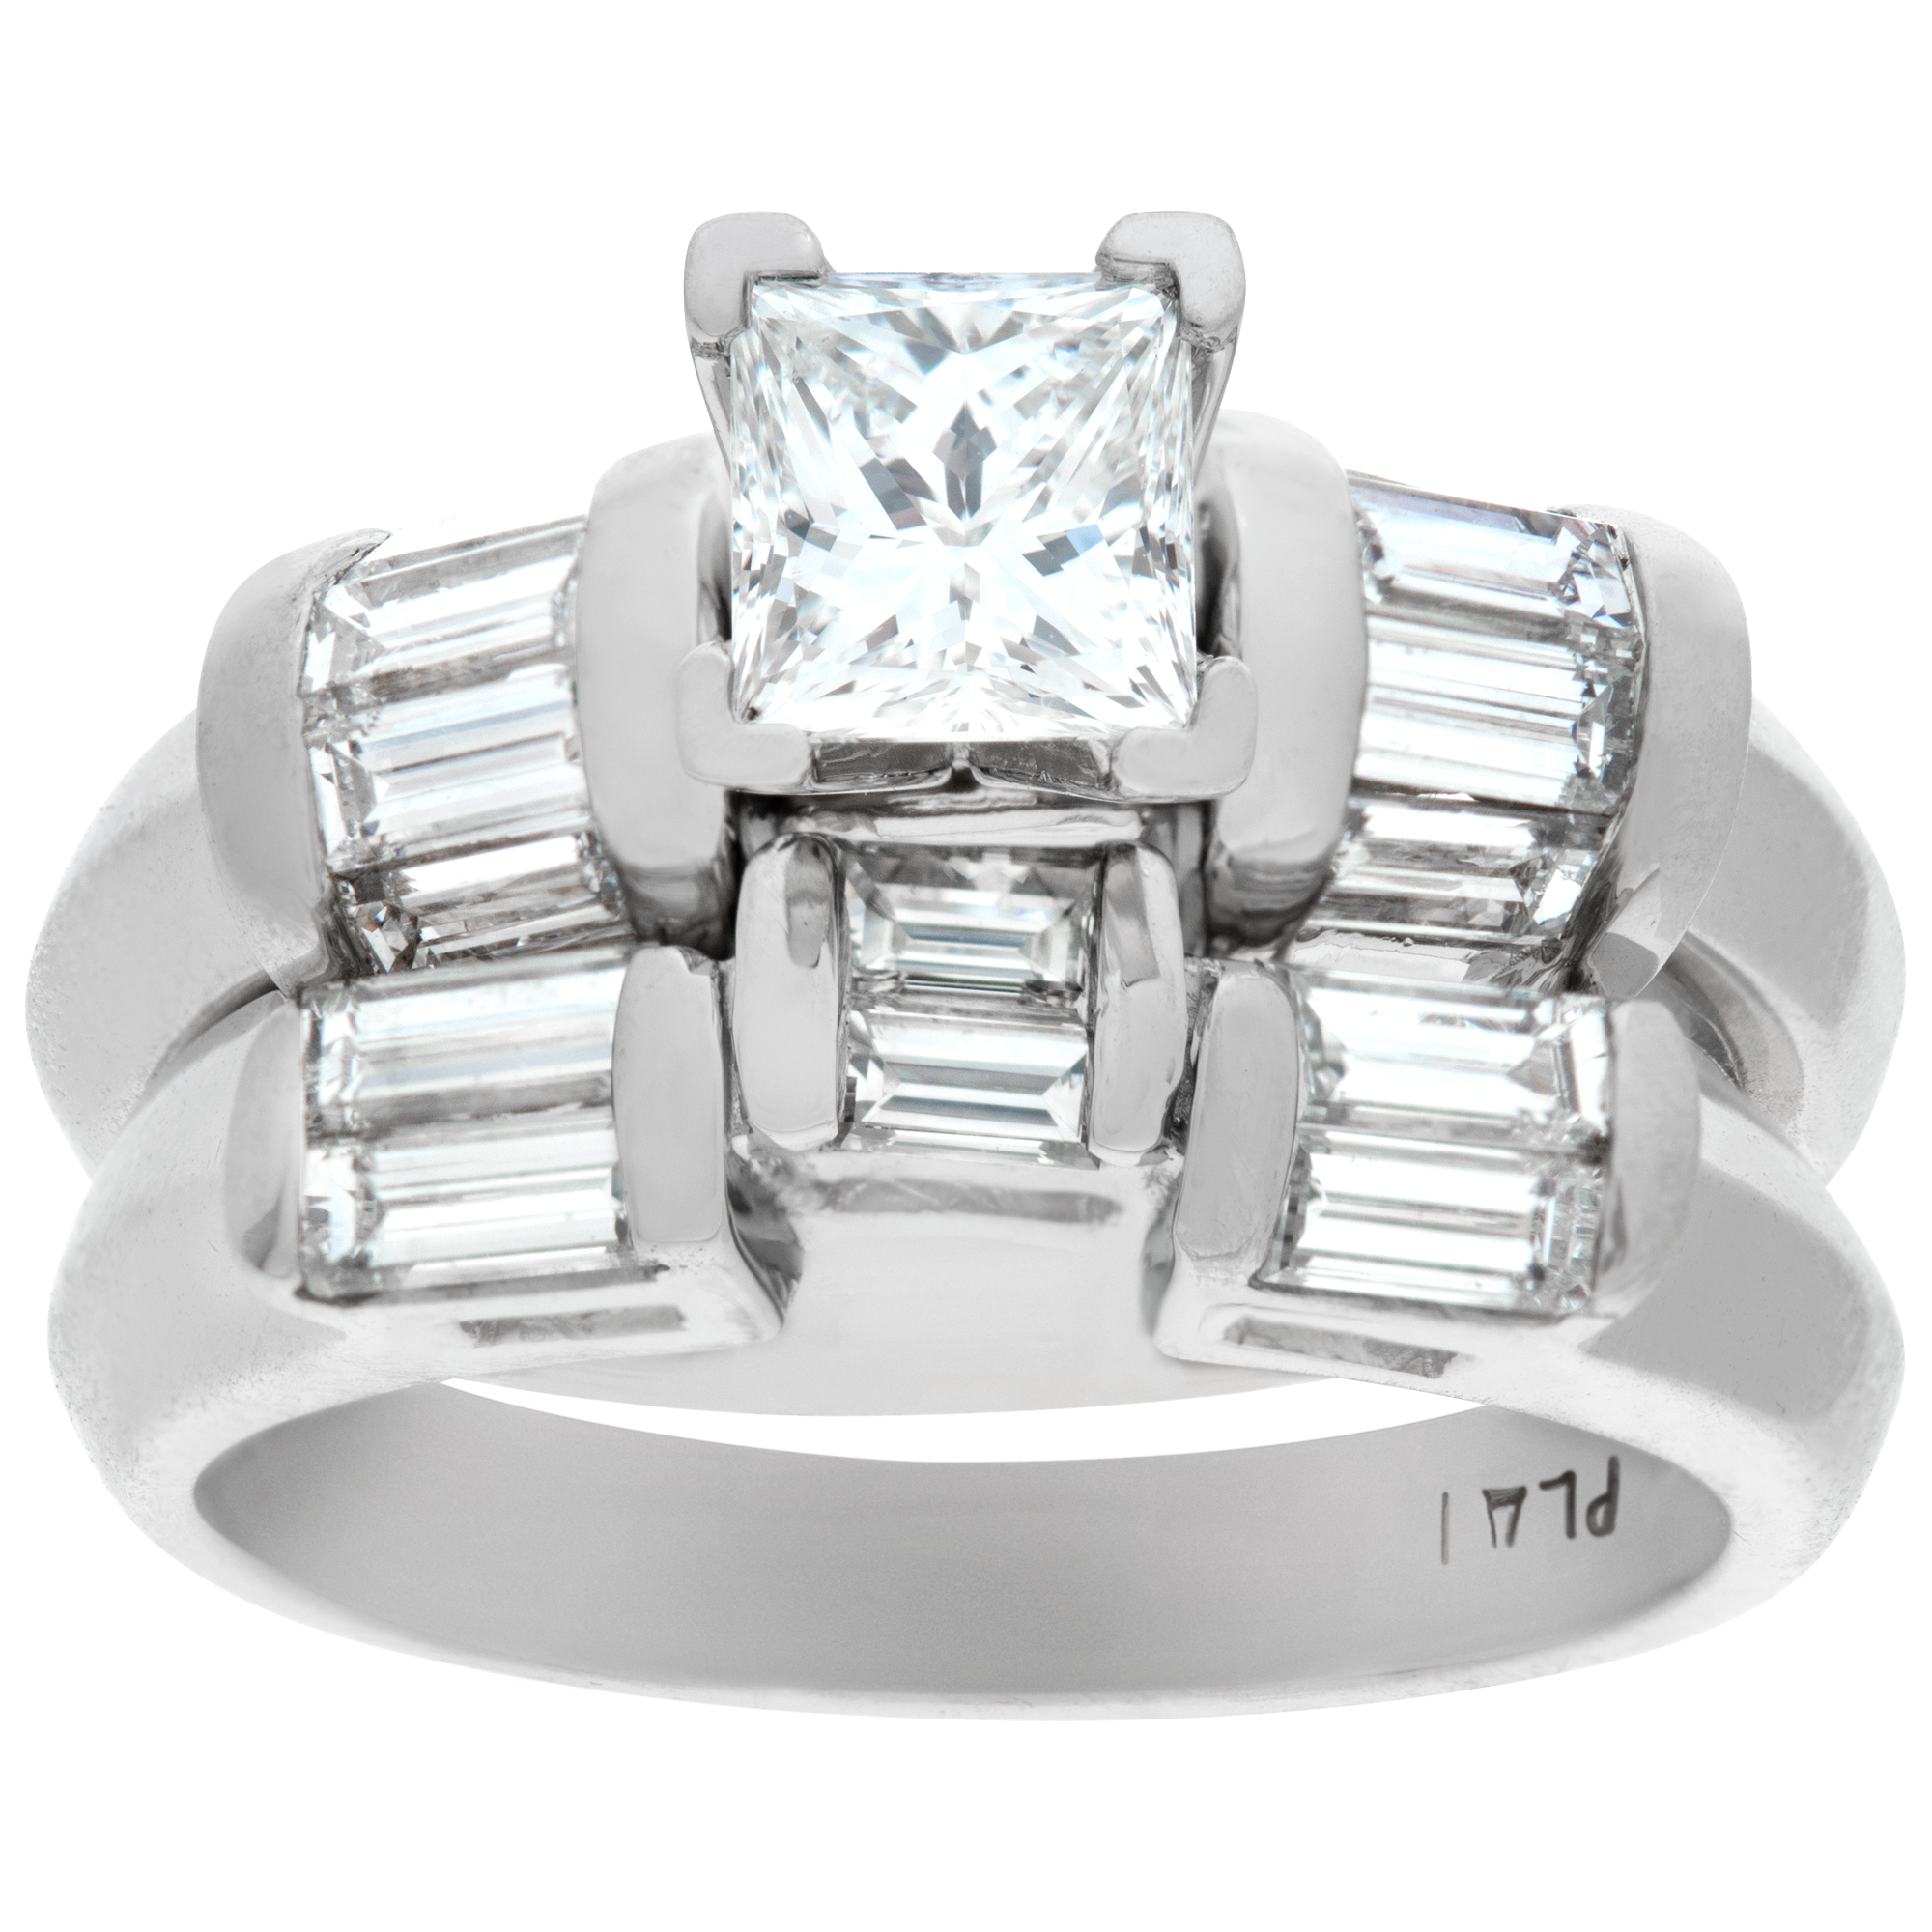 GIA certified rectangular modified brilliant cut 0.74 carat diamond (E color, SI1 clarity) (Stones)